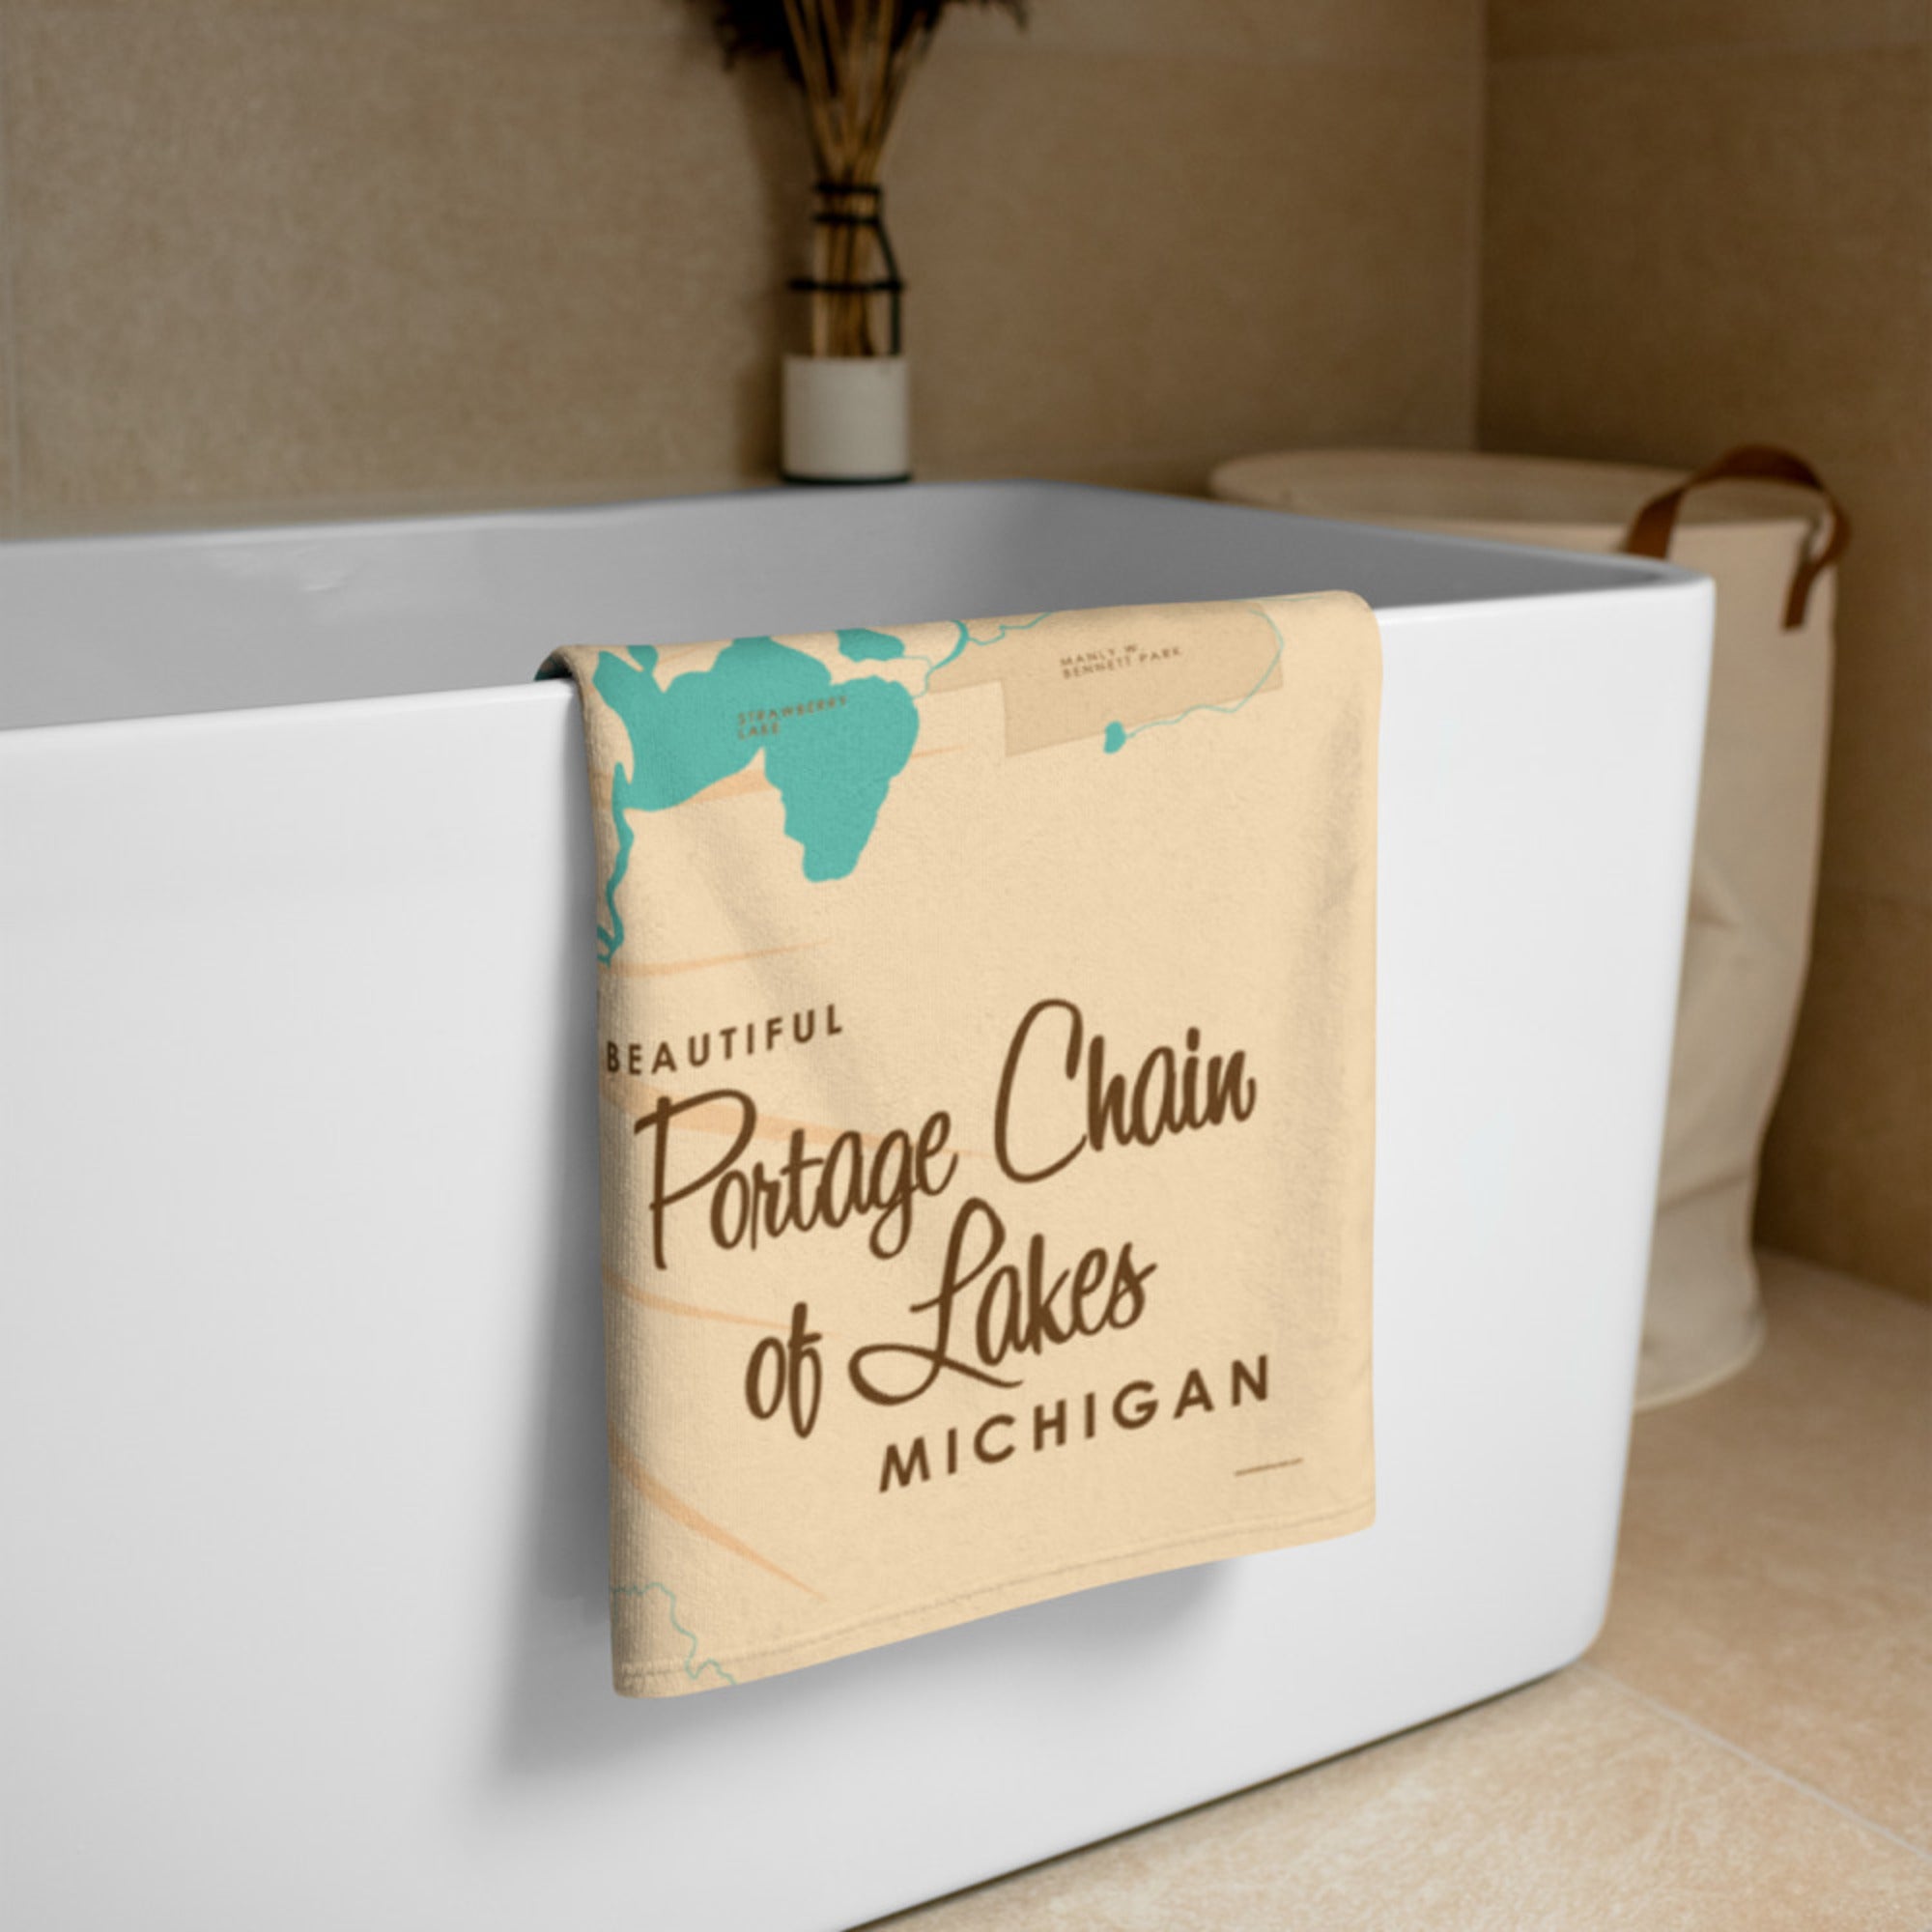 Portage Chain of Lakes Michigan Beach Towel